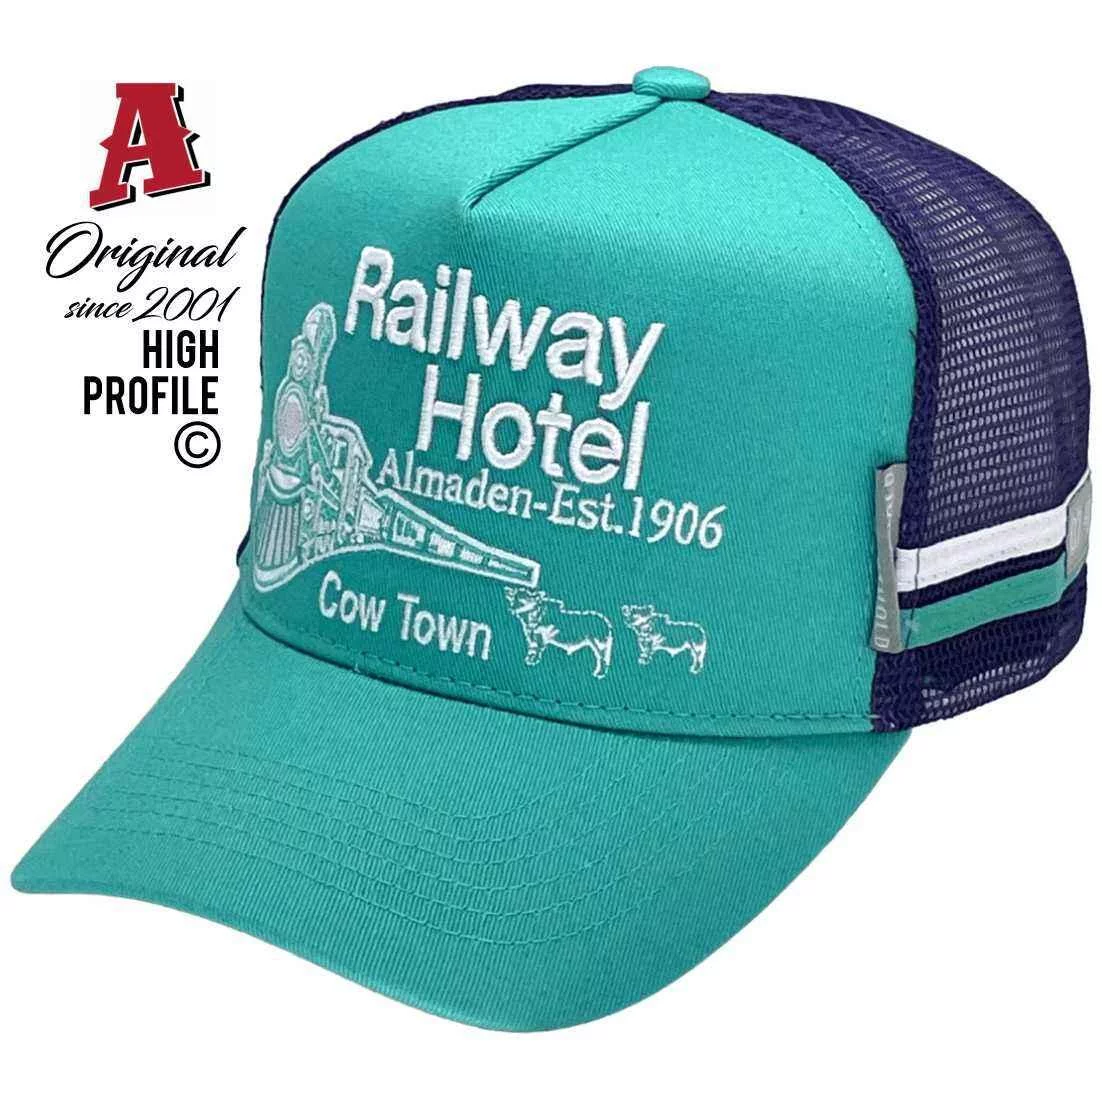 Railway Hotel Almaden- East QLD Midrange Aussie Trucker Hats with 2 SideBands & Australian HeadFit Crown Green Purple Snapback